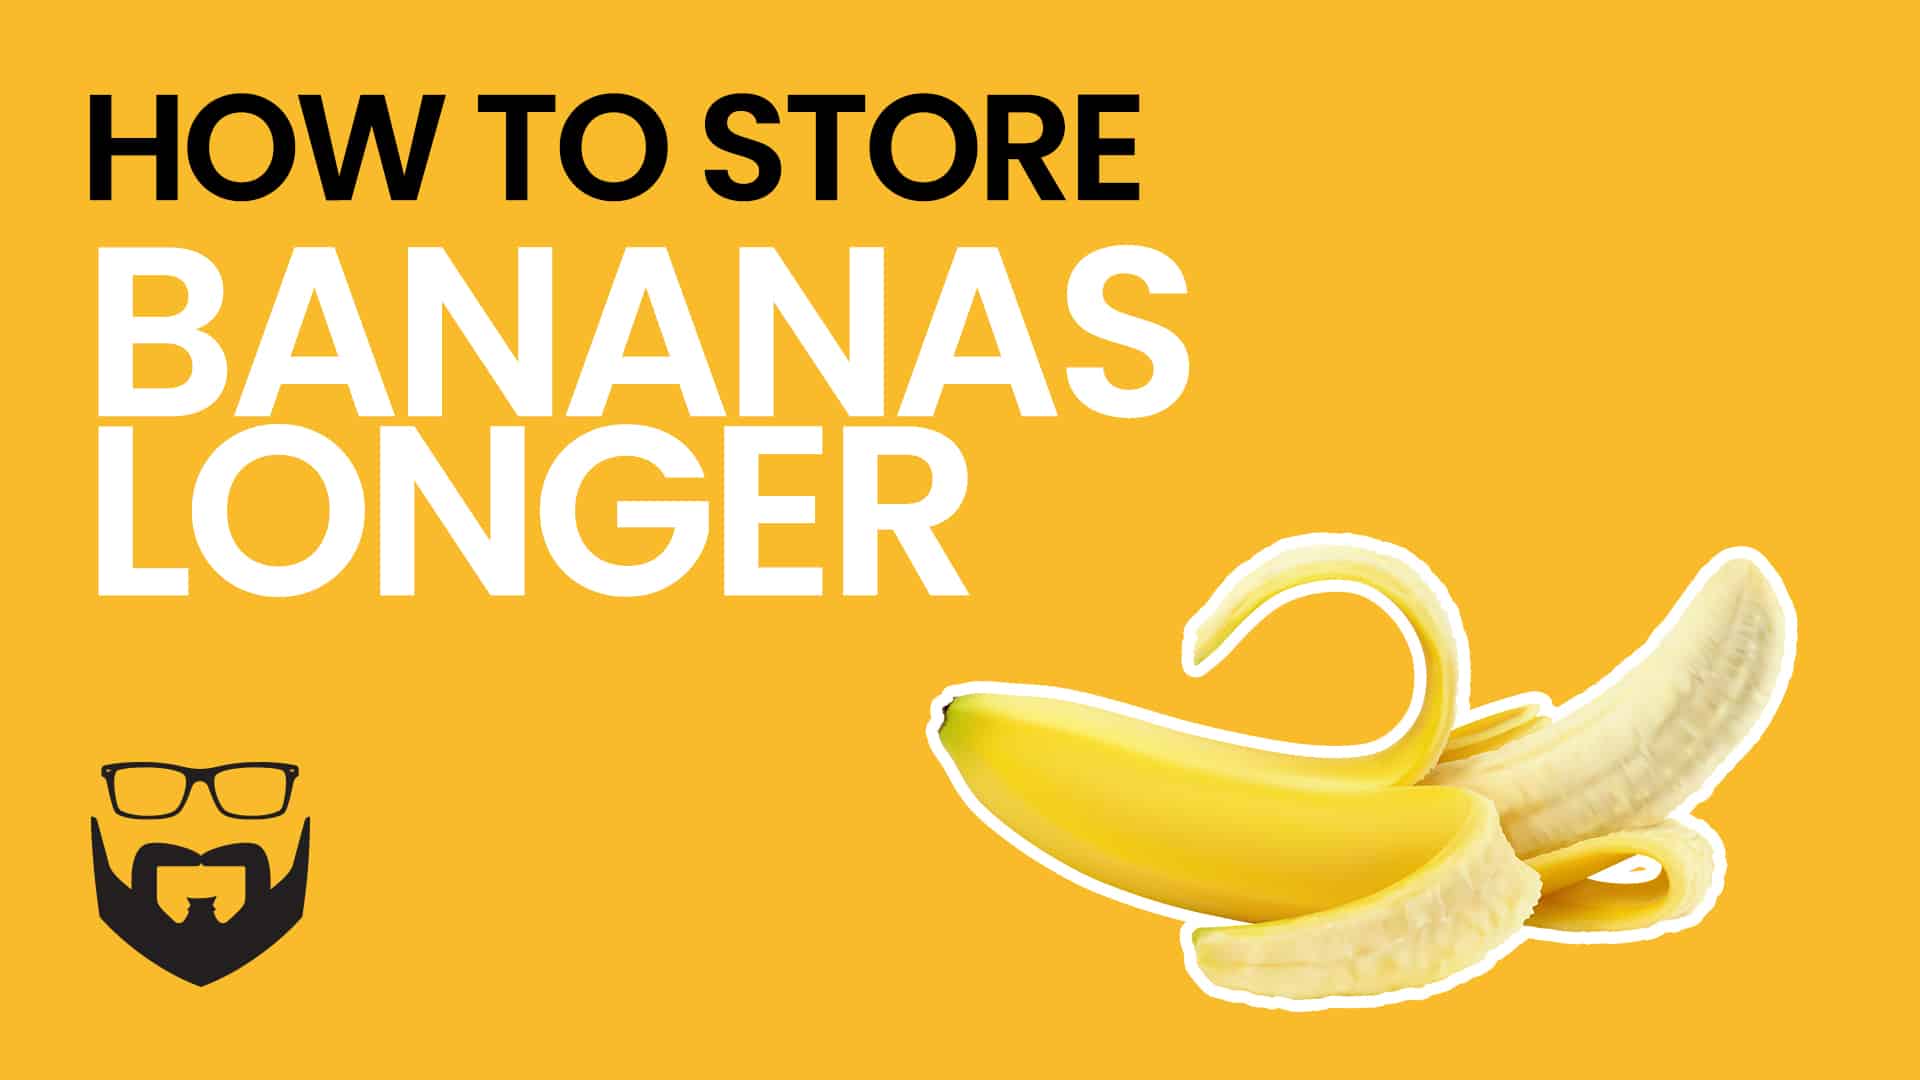 How to Store Bananas Longer Video - Yellow